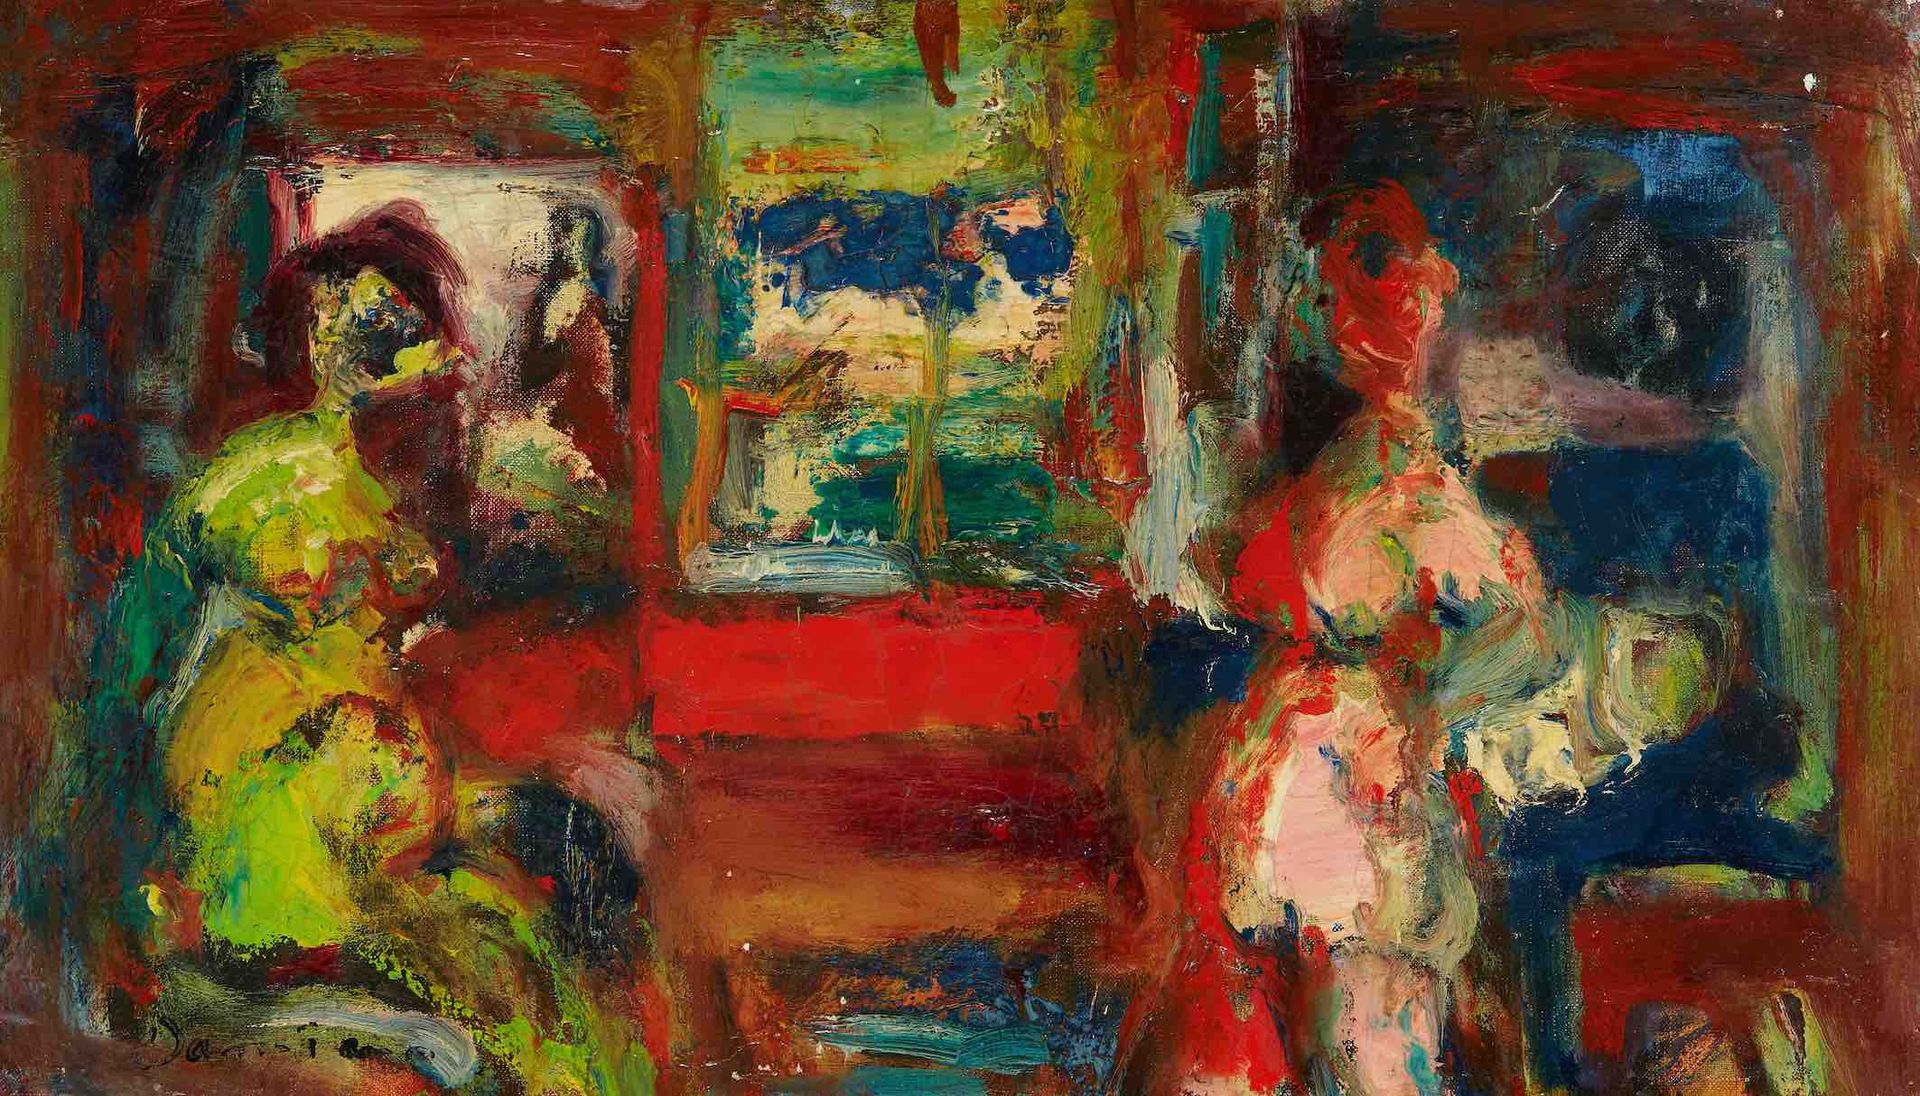 Null 伯纳德-达米亚诺(1926-2000)

窗边的人

布面油画，左下角有签名

尺寸：27 x 46 cm